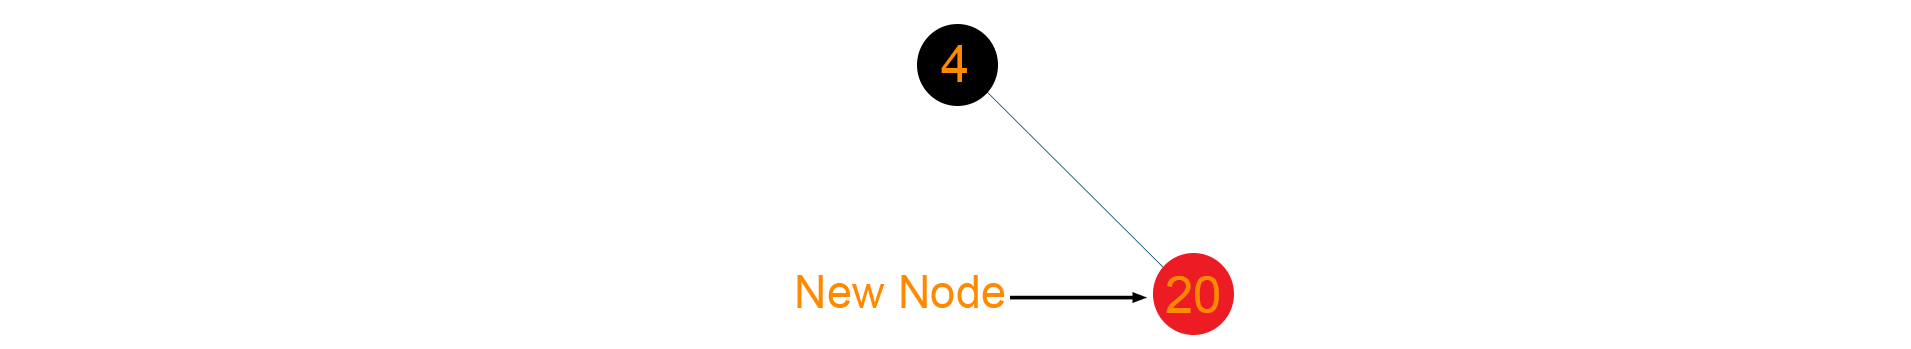 Inserting new node 20 inside the tree